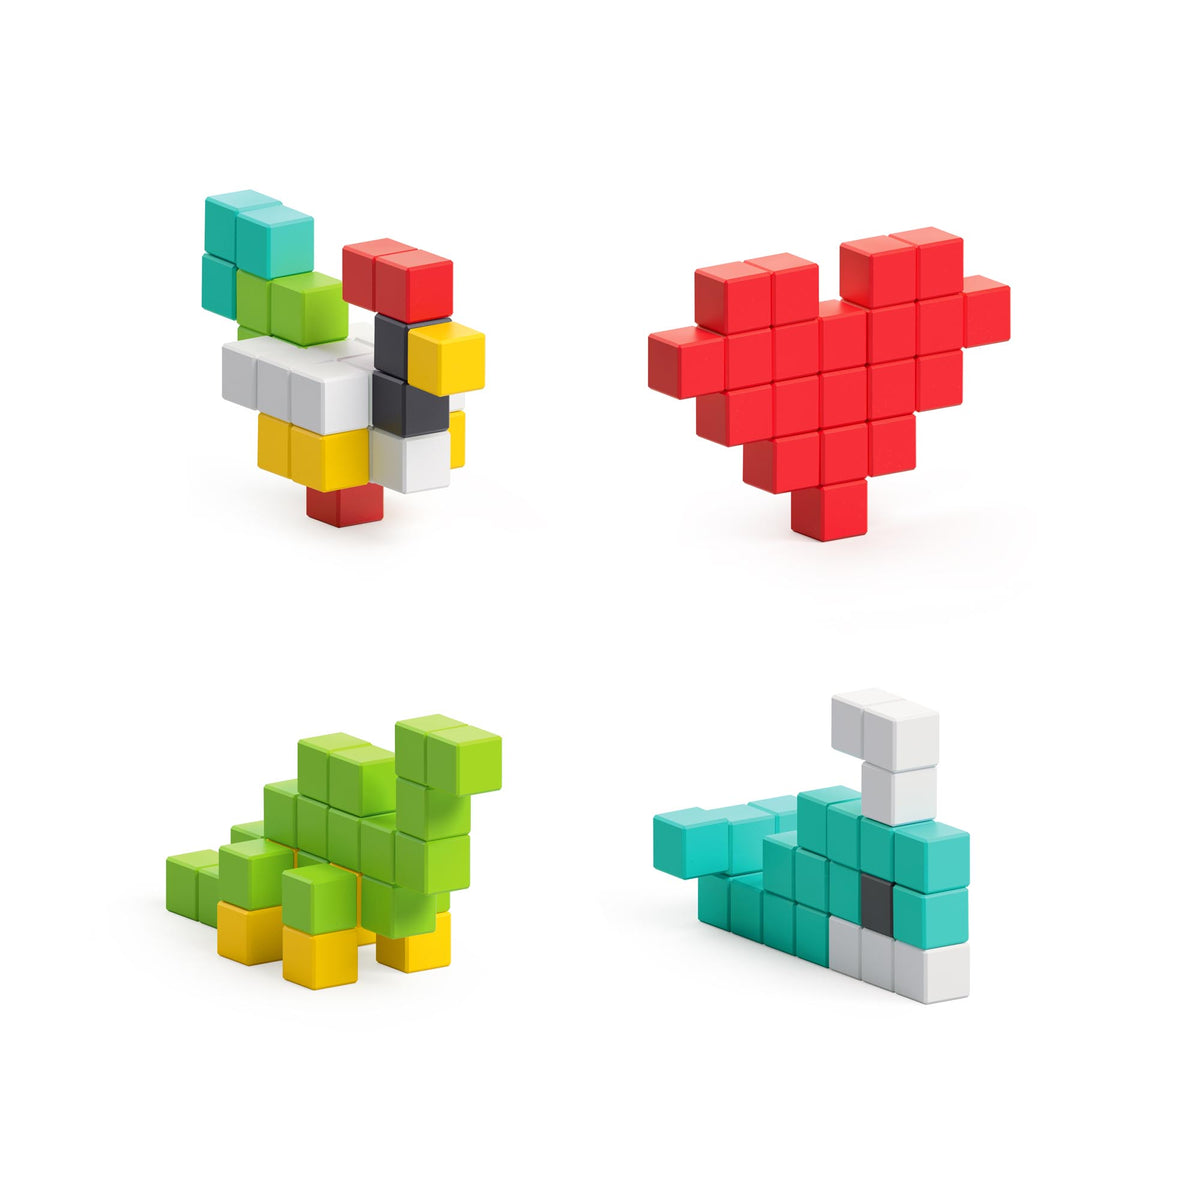 PIXIO-100 Magnetic Blocks in 6 Colors +Free App - Fog Town Toys